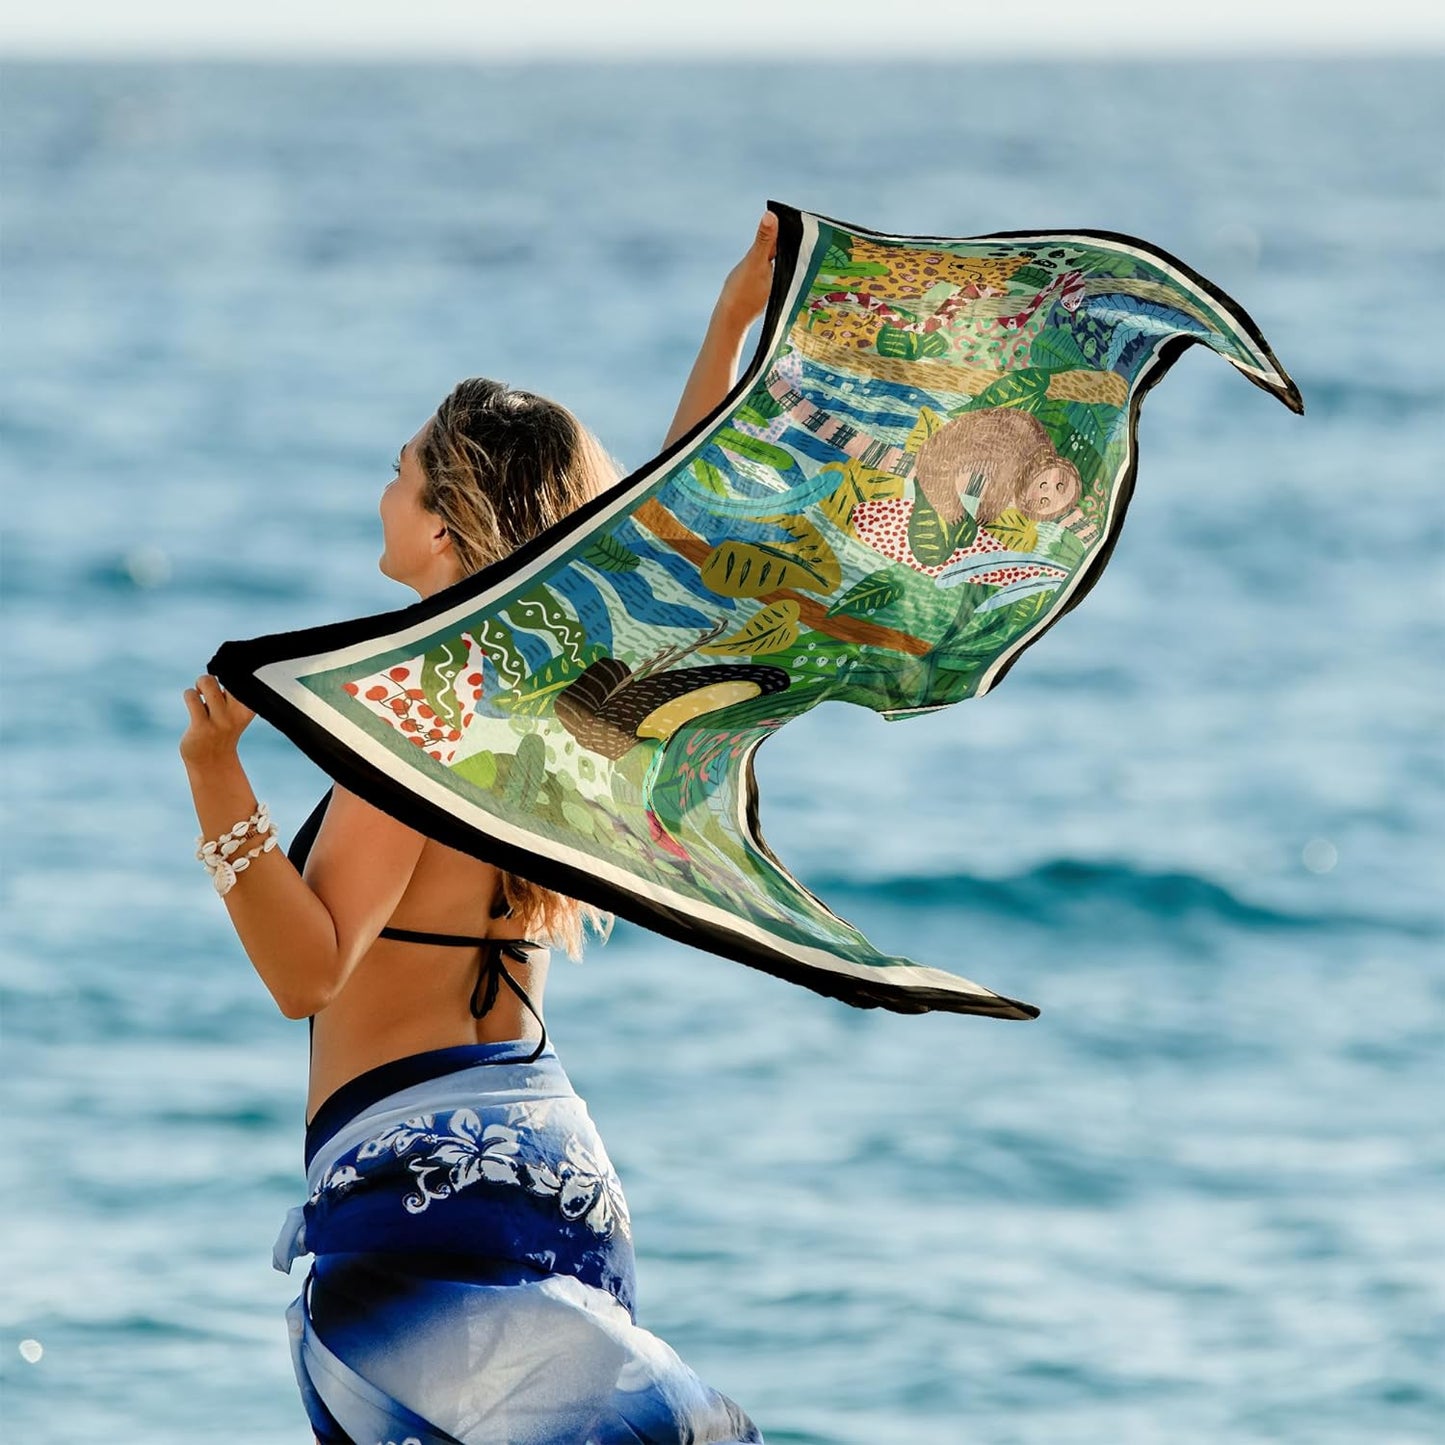 dscarf Women Sarong Swimsuit Printed Cover up Chiffon Long Bikini Wraps | Pareo Swimwear Beach Bathing Suit Cover Up Animals Design 2